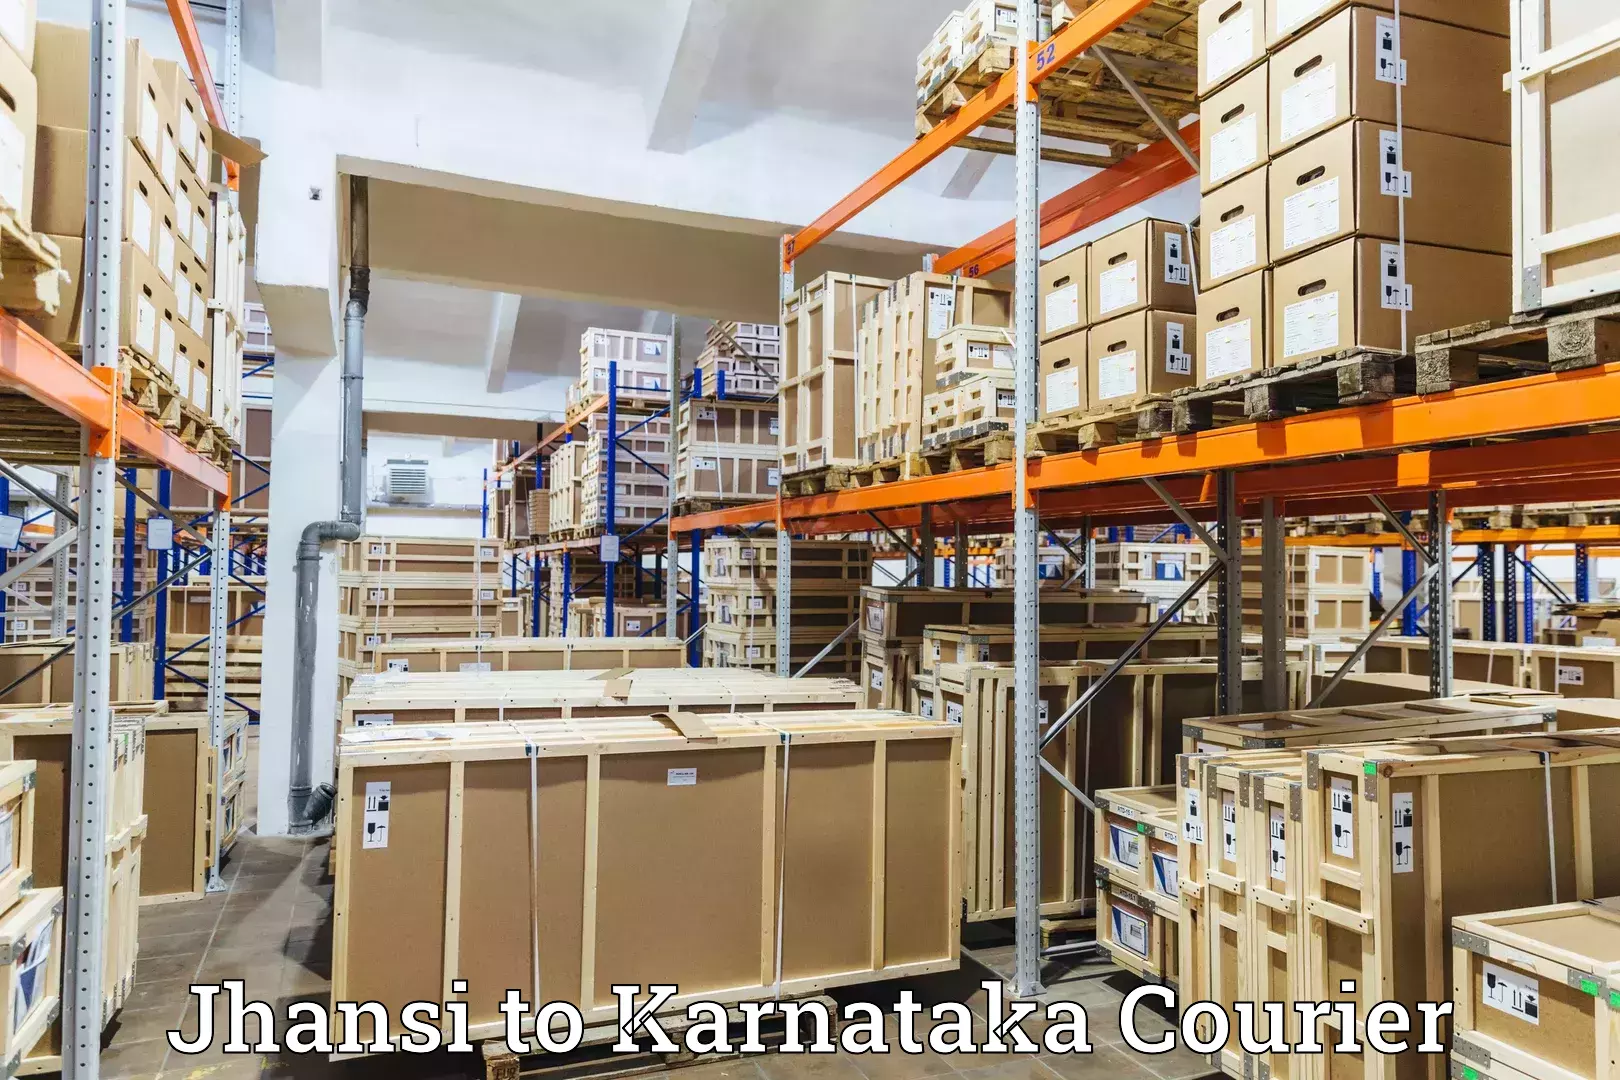 Weekend courier service in Jhansi to Karnataka